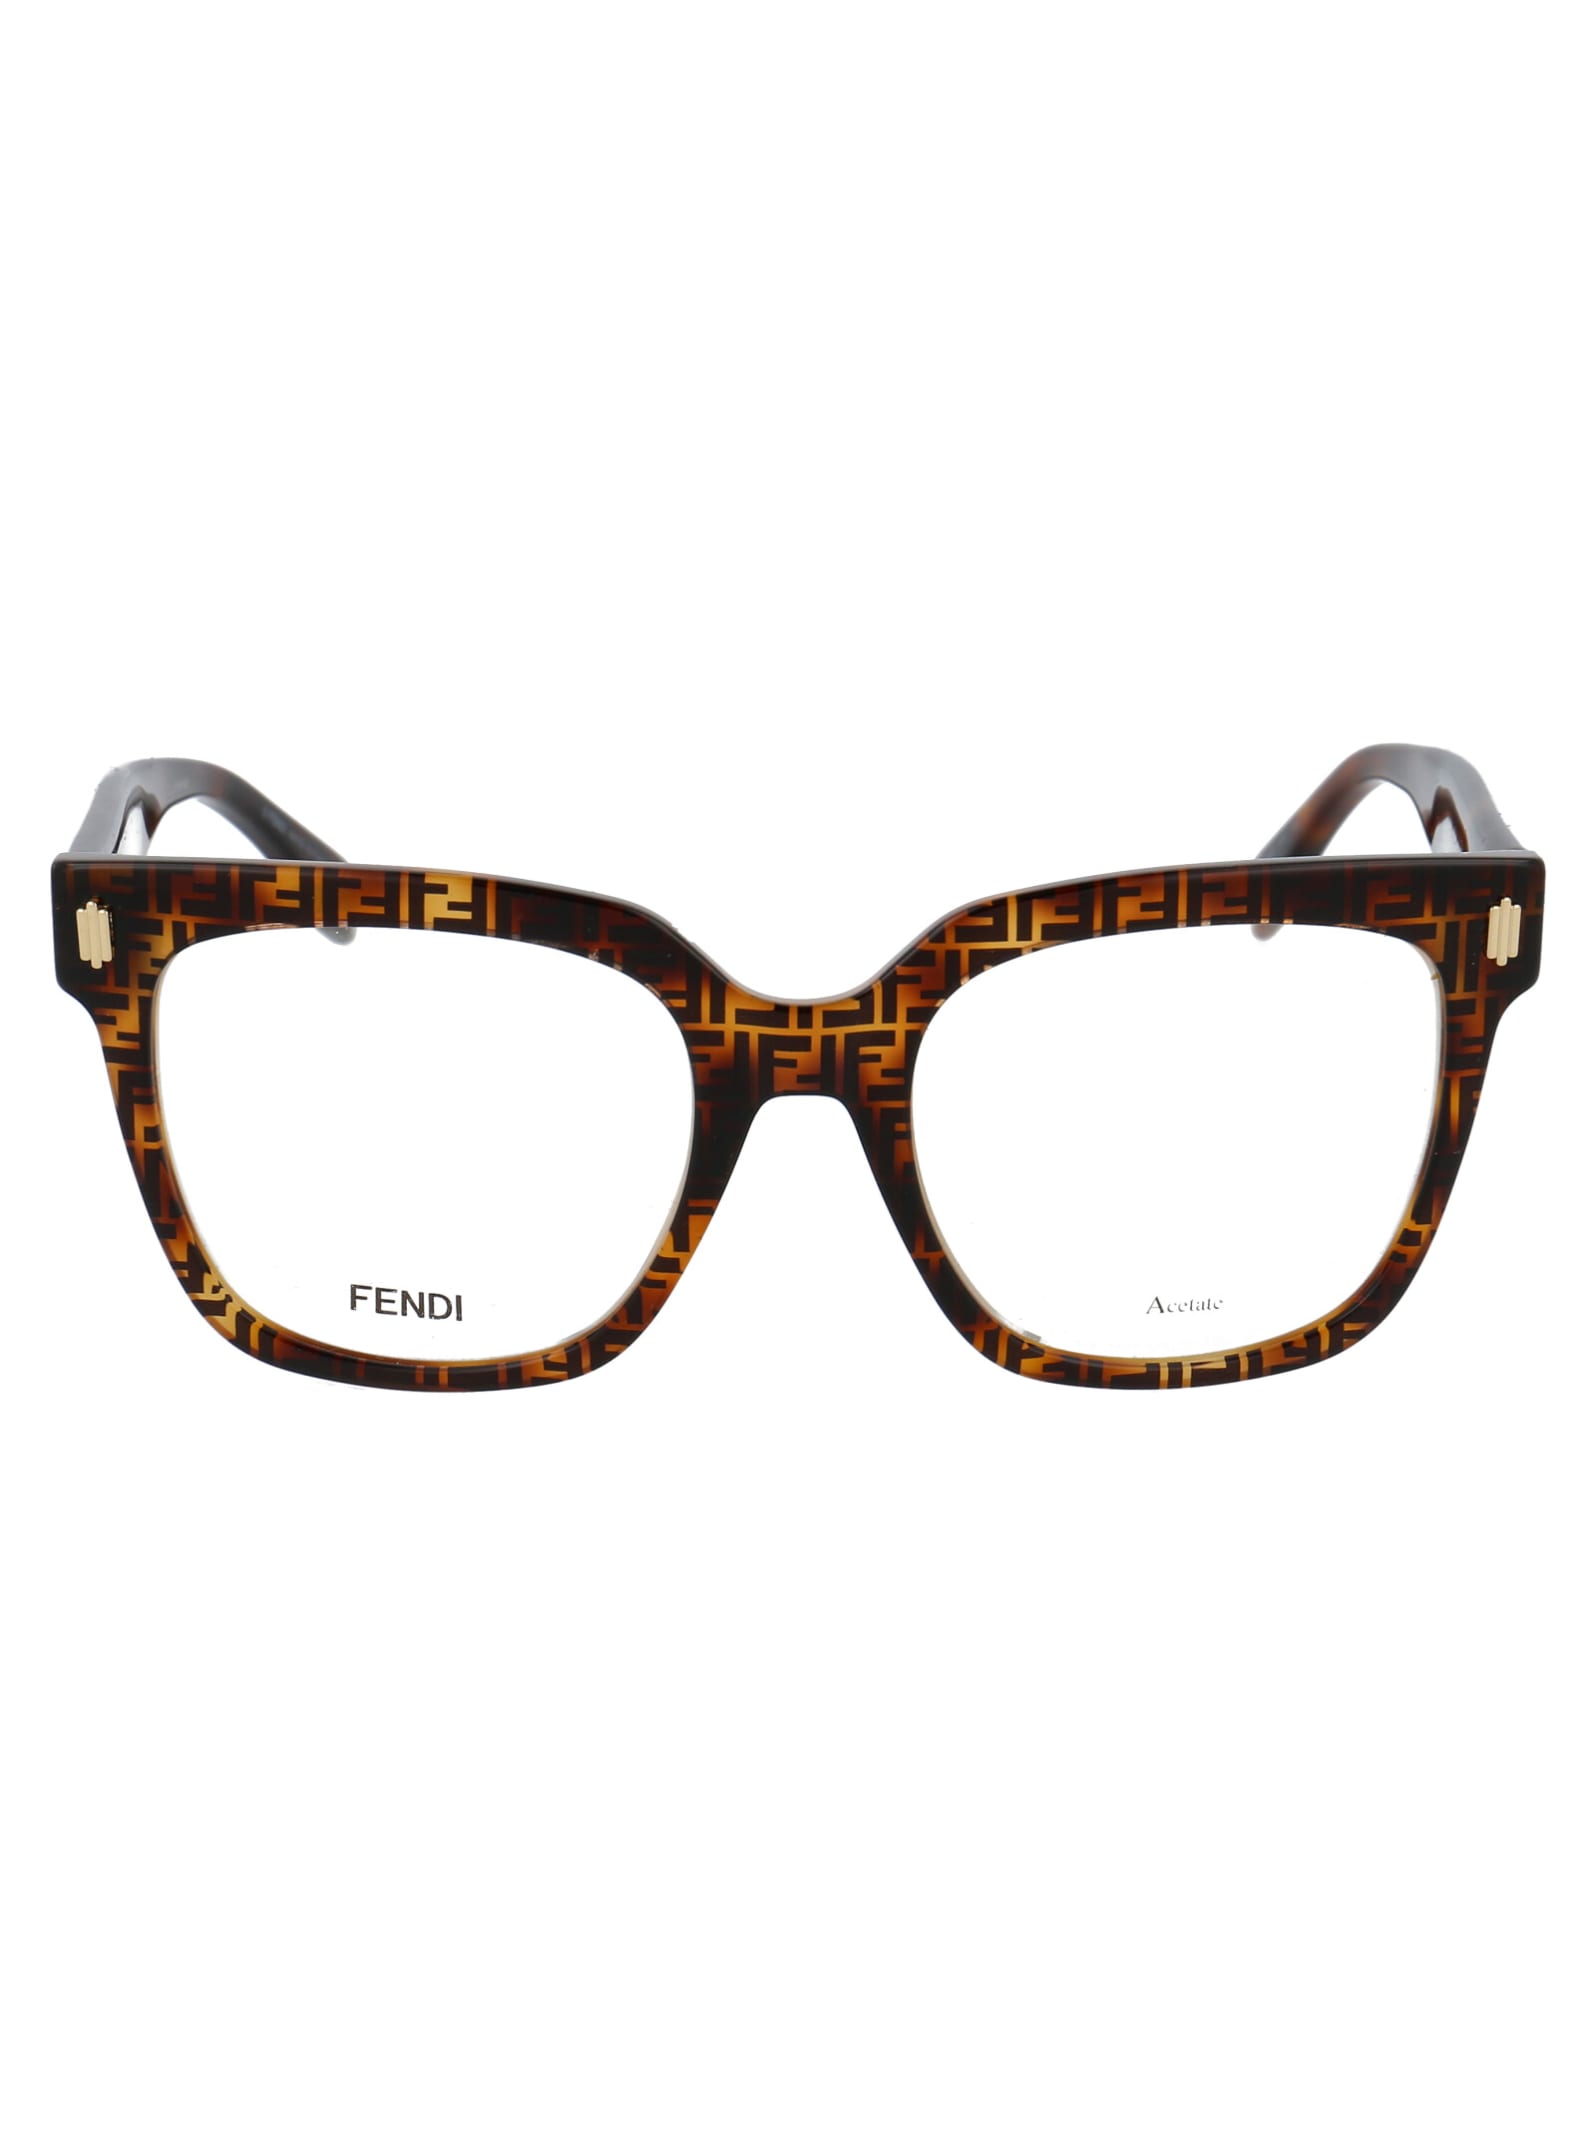 Fendi Ff 0463 Glasses In 2vm Hvna Pattern